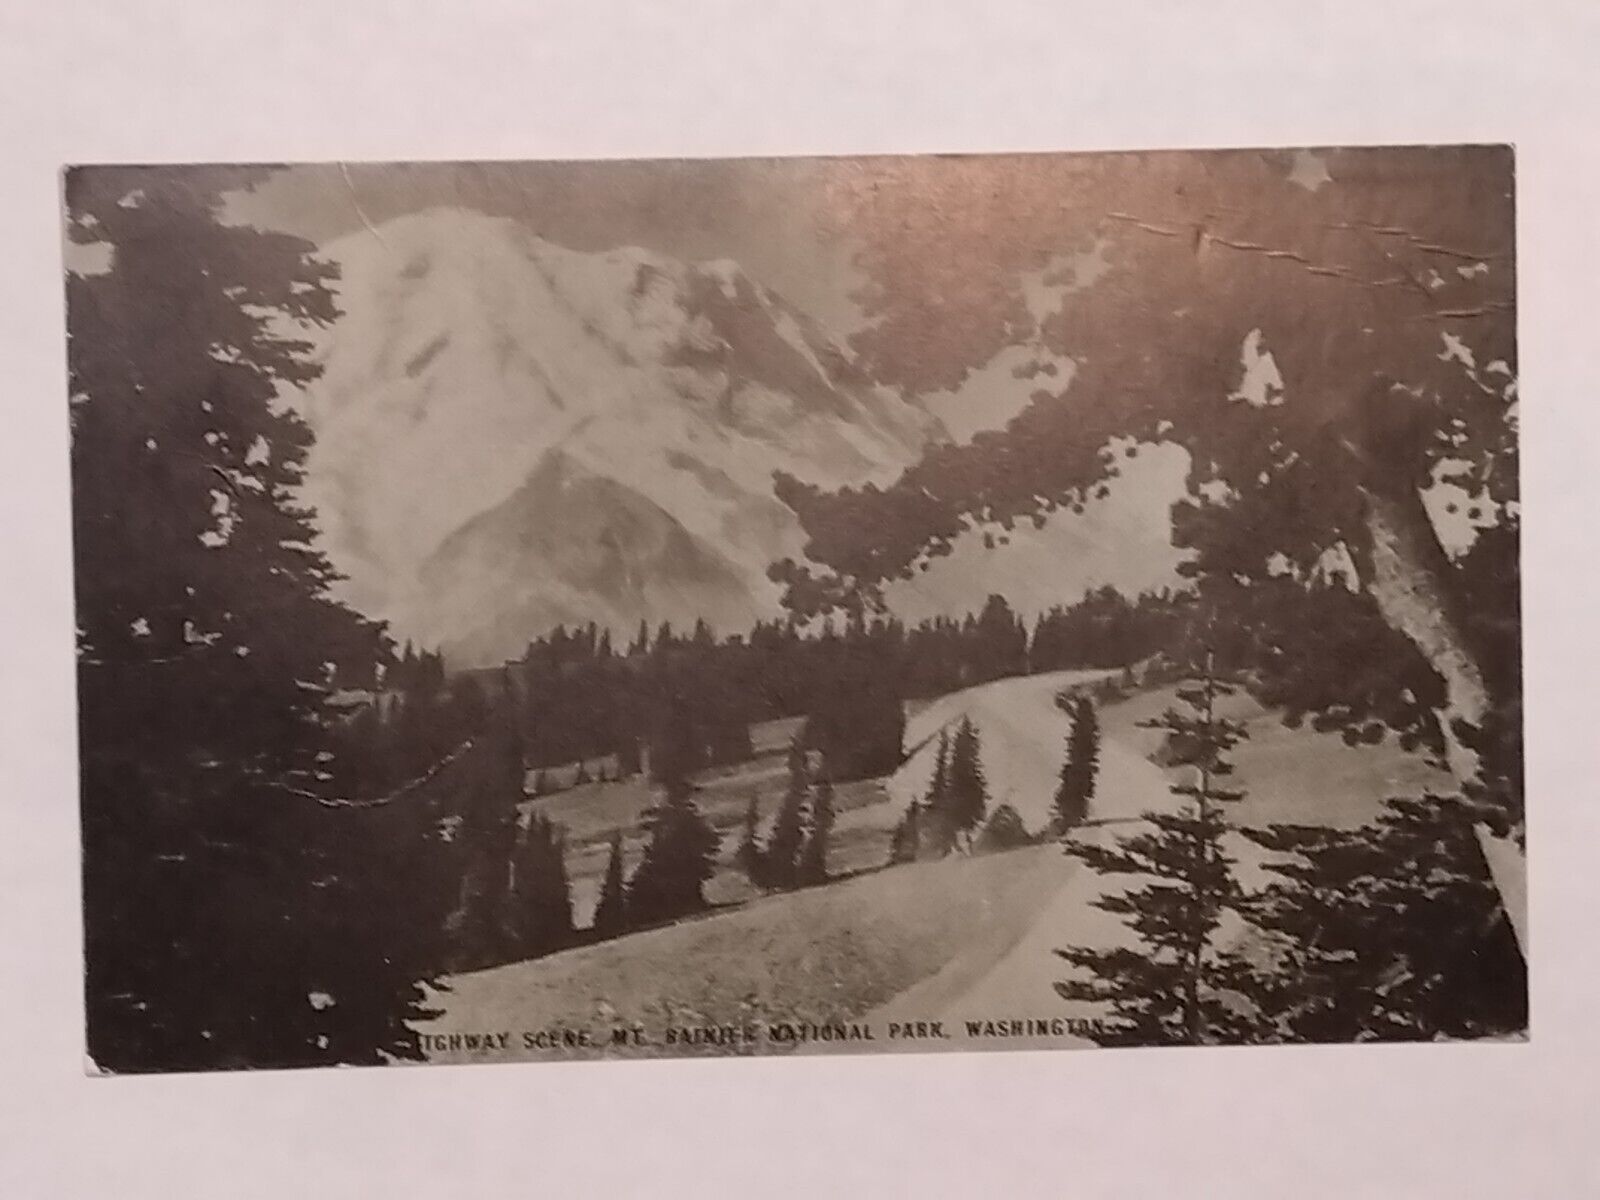 Highway Scene Mt Rainier National Park Washington Postcard